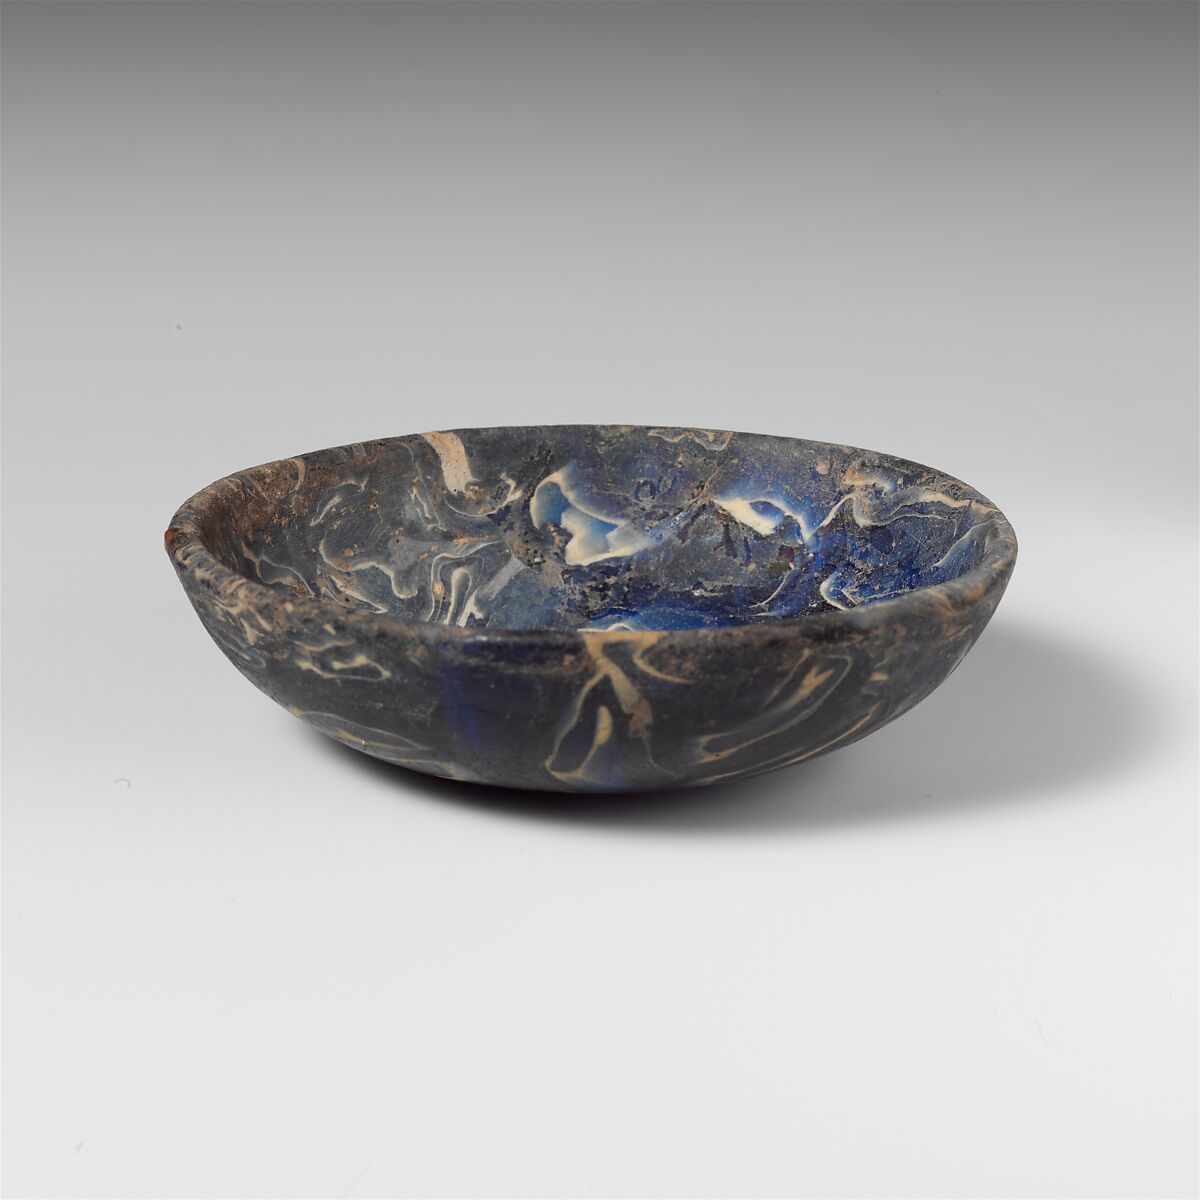 Glass mosaic bowl, Glass, Roman, probably Italian 